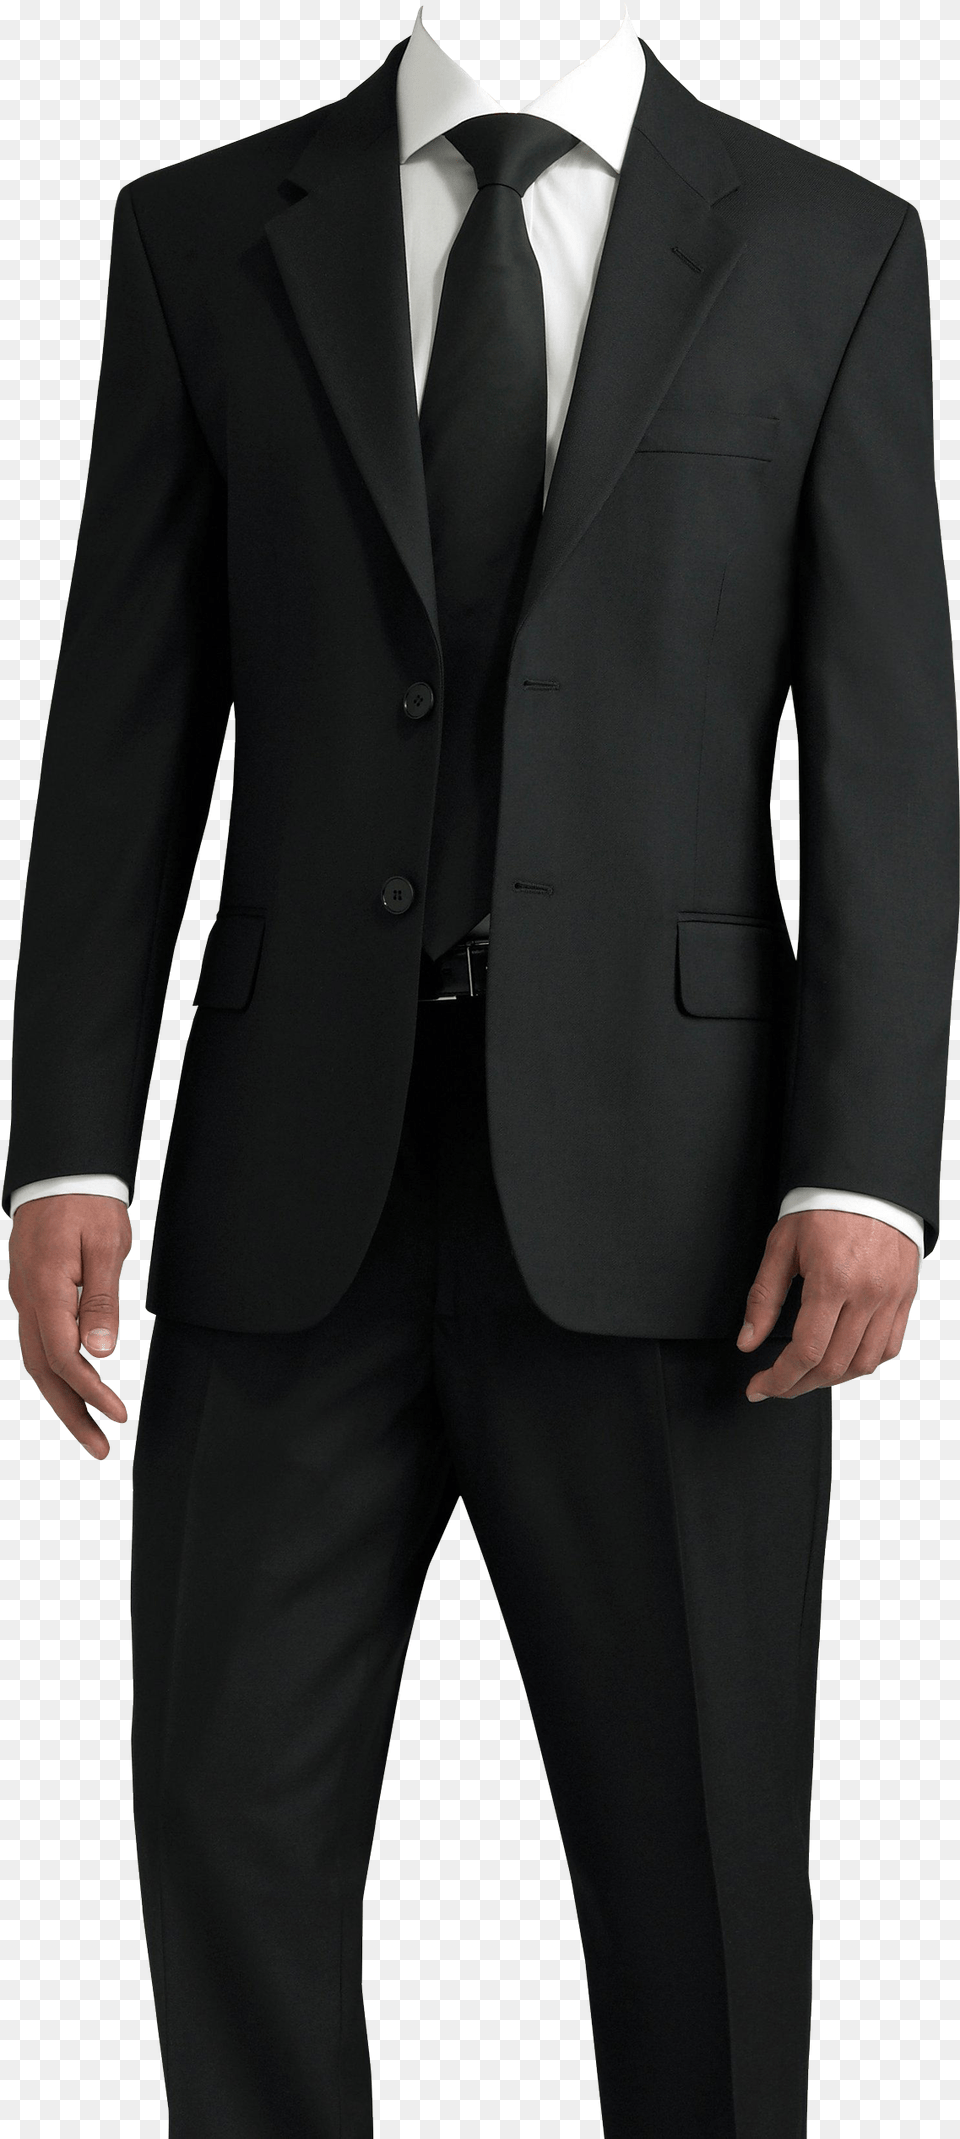 Suit Background Suit For Photoshop, Clothing, Formal Wear, Tuxedo, Coat Free Transparent Png